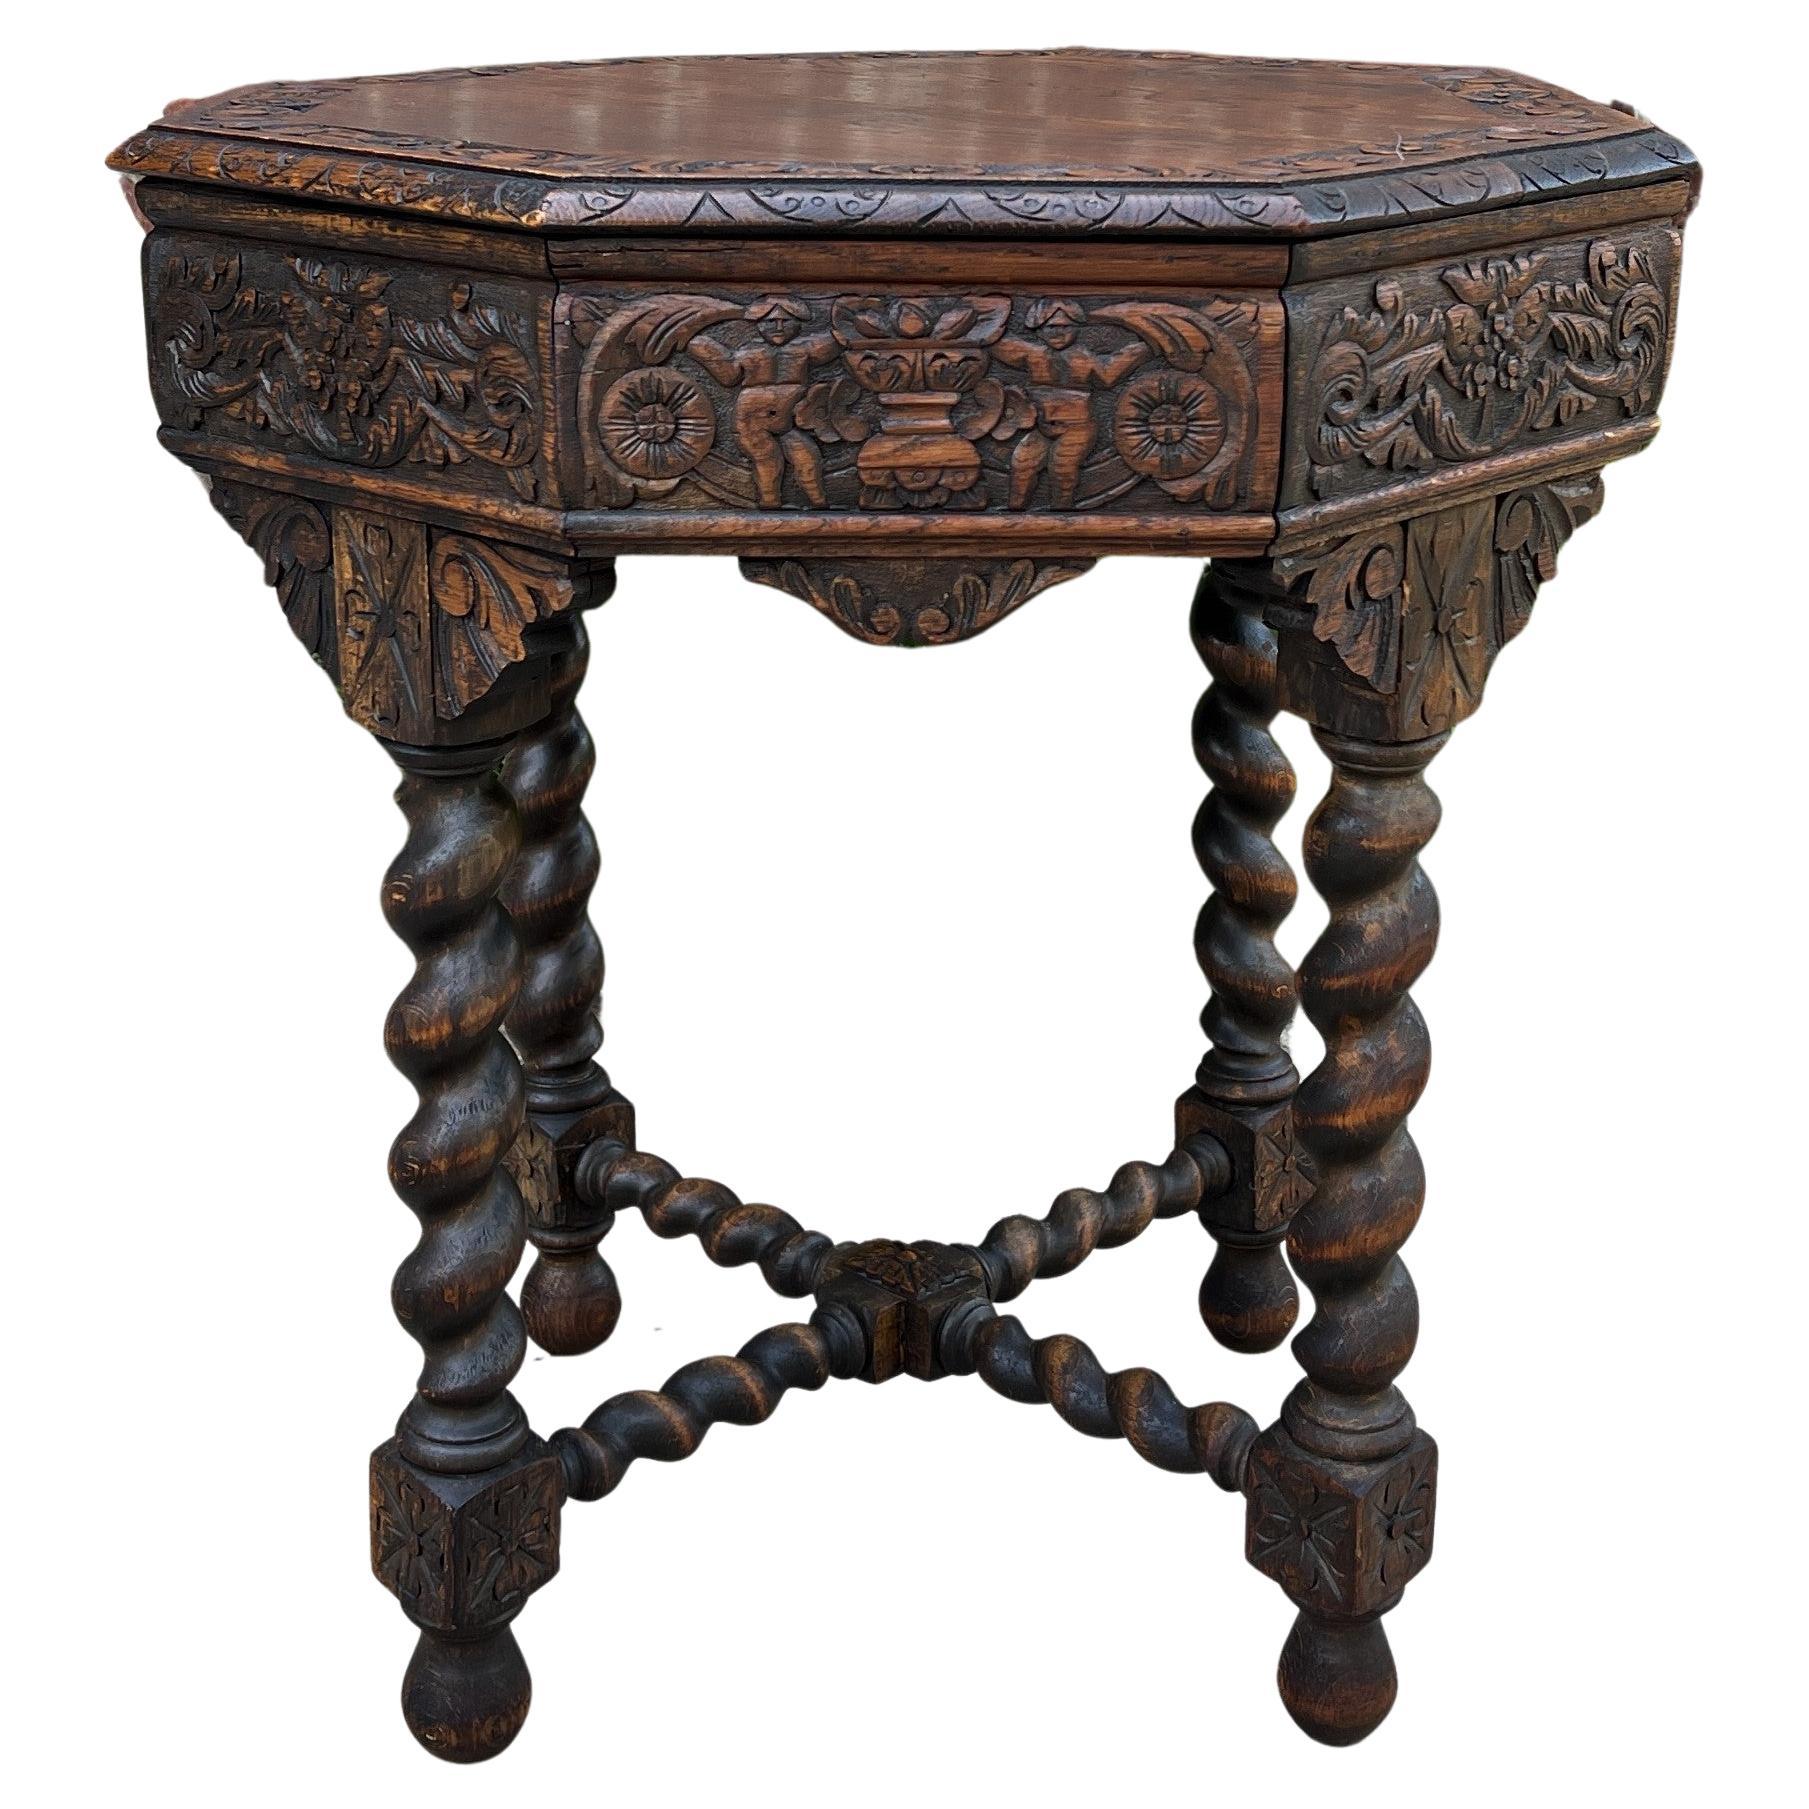 Antique French Table Barley Twist Octagonal Renaissance Revival Carved Oak 19thc For Sale